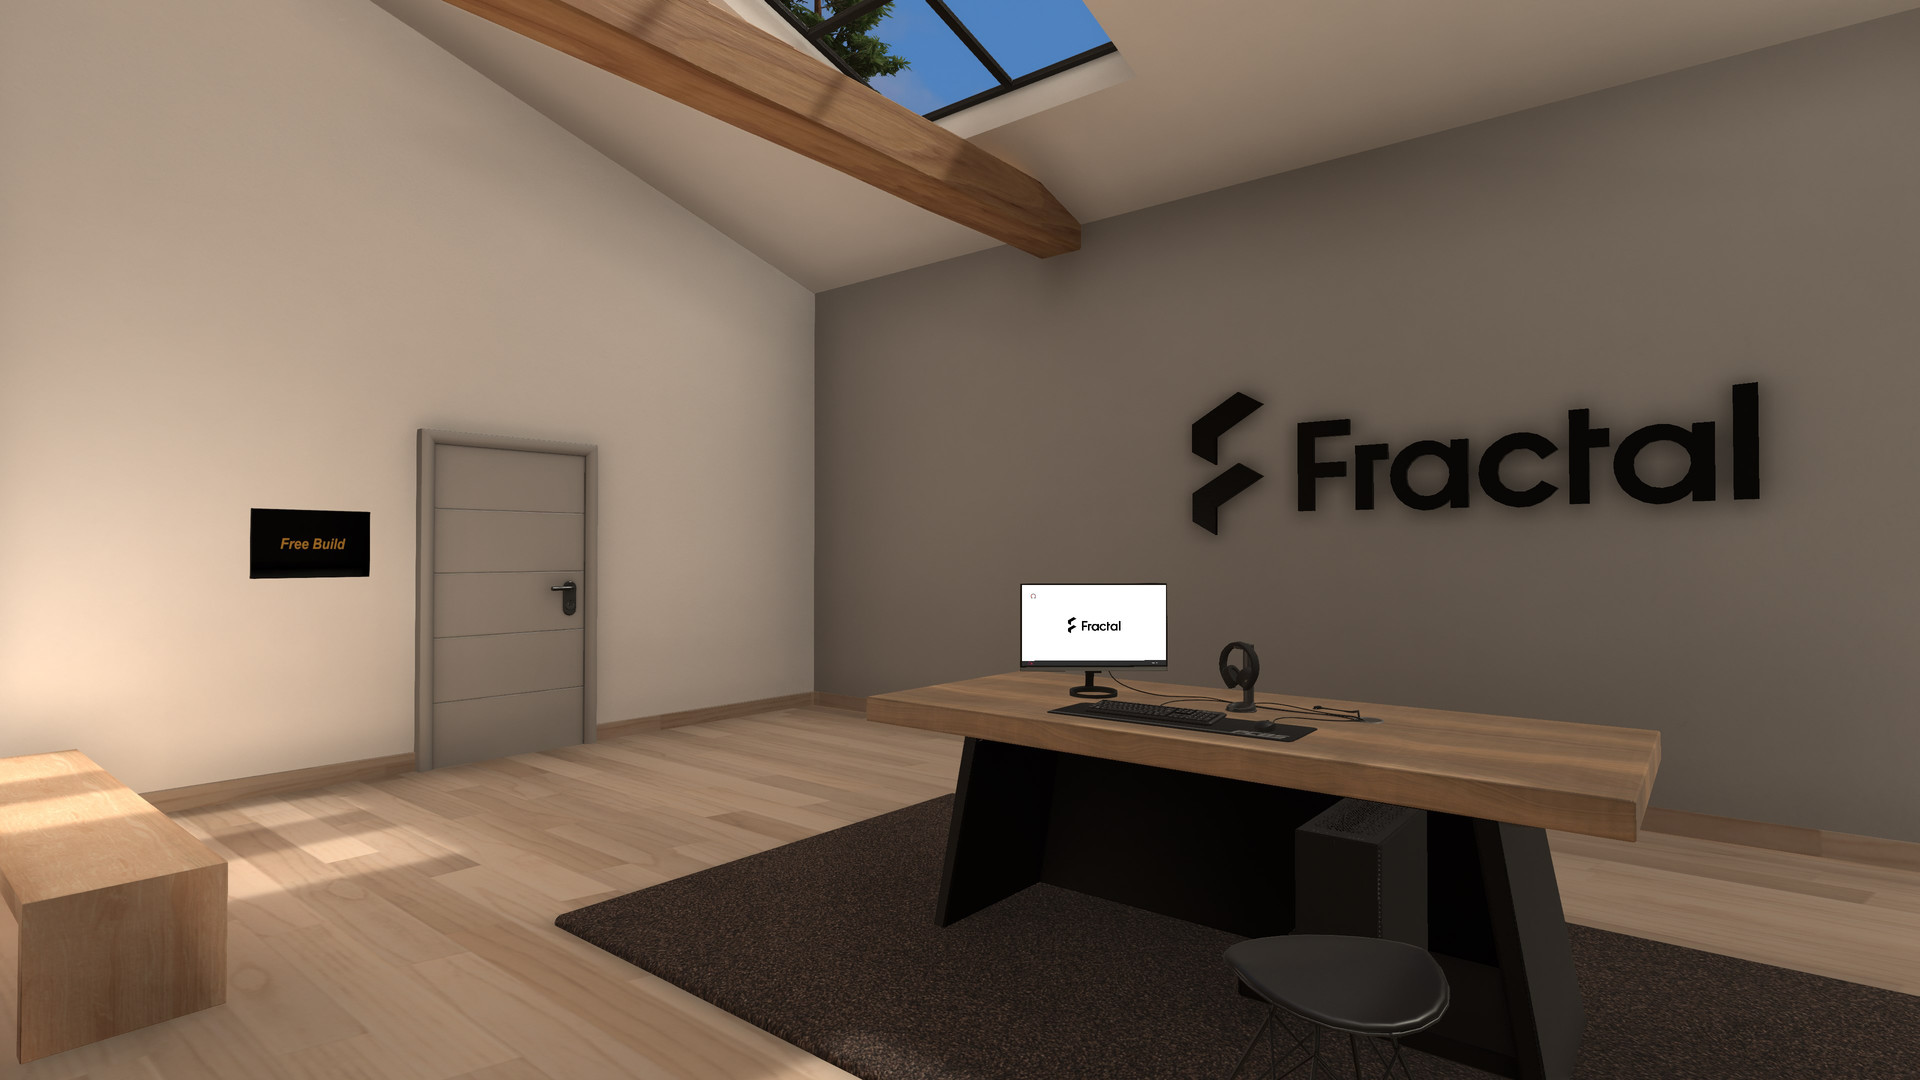 PC Building Simulator: Fractal Edition Steam CD Key